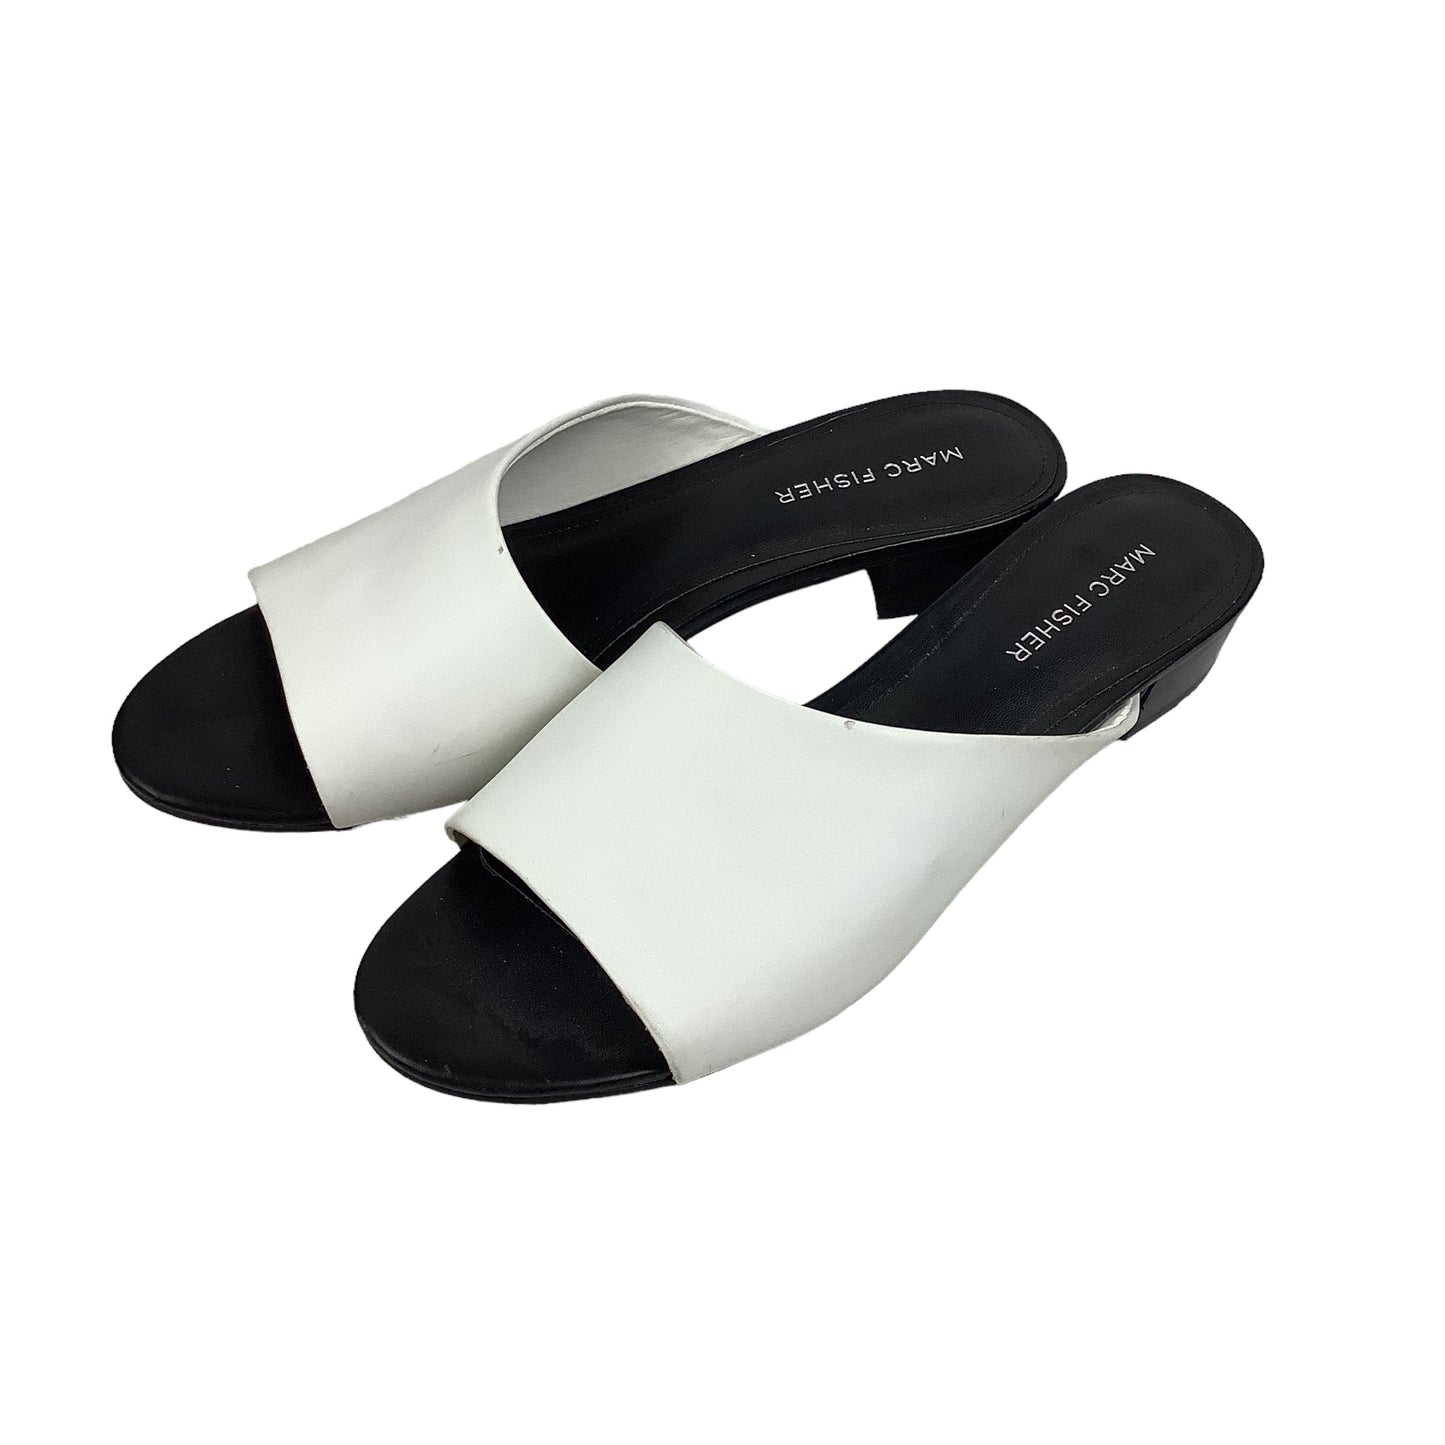 Black & White Sandals Heels Block Marc Fisher, Size 8